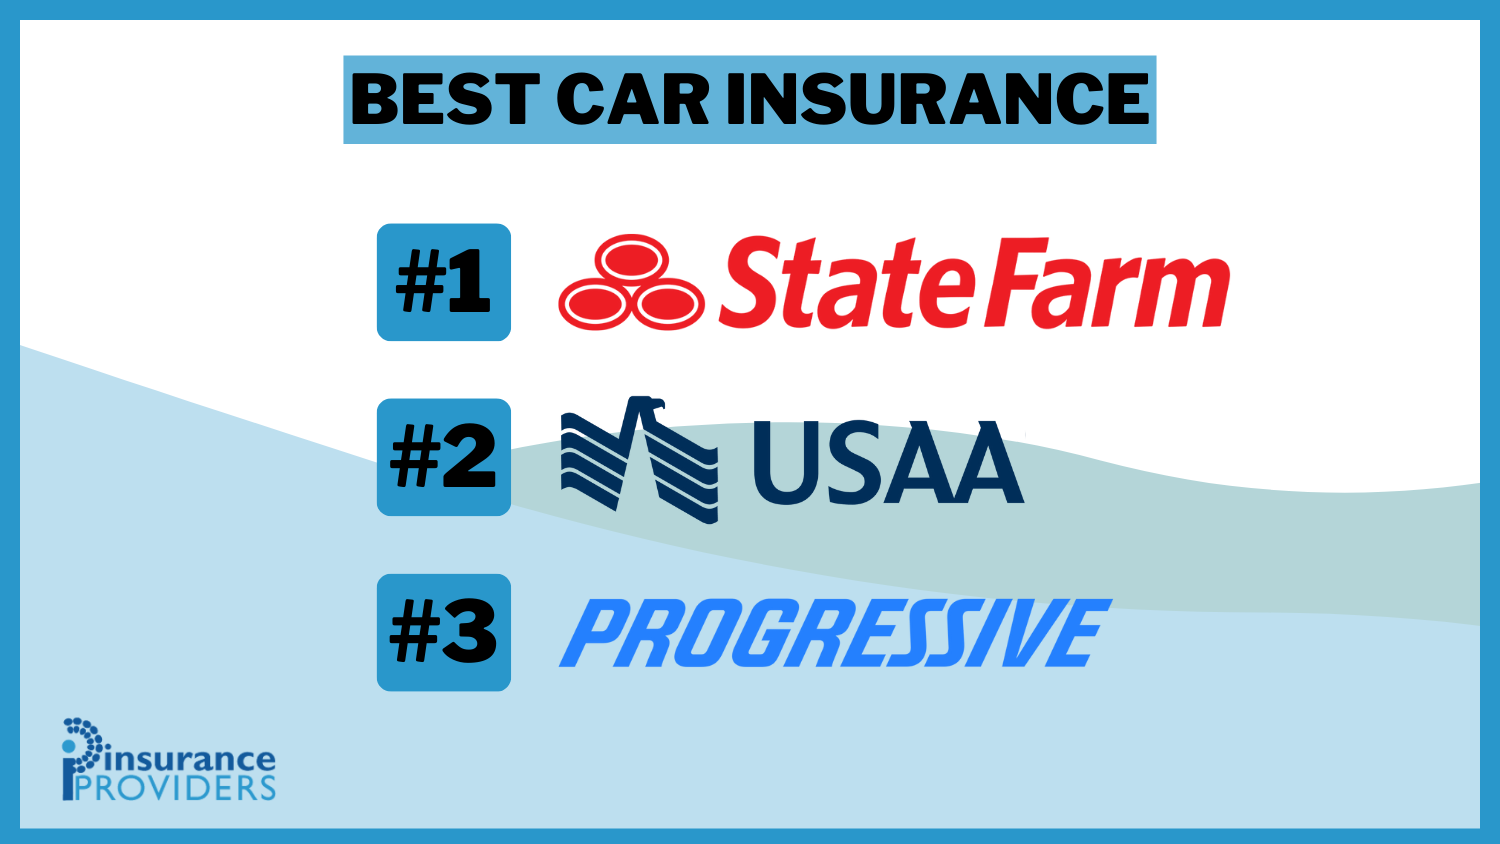 Best Auto Insurance: State Farm, USAA, and Progressive